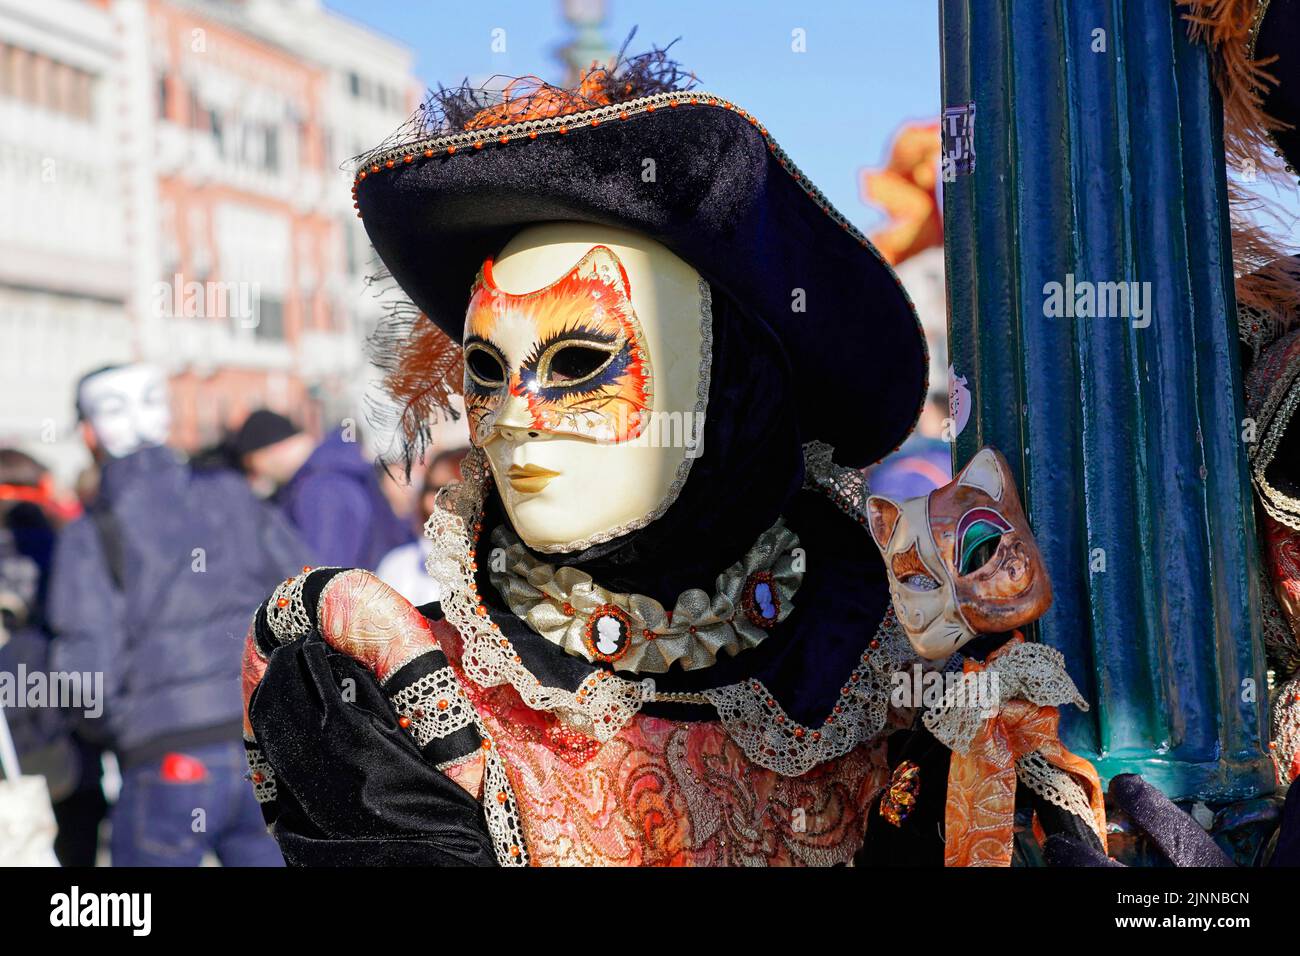 Donna in costume con maschera, carnevale, carnevale a Venezia